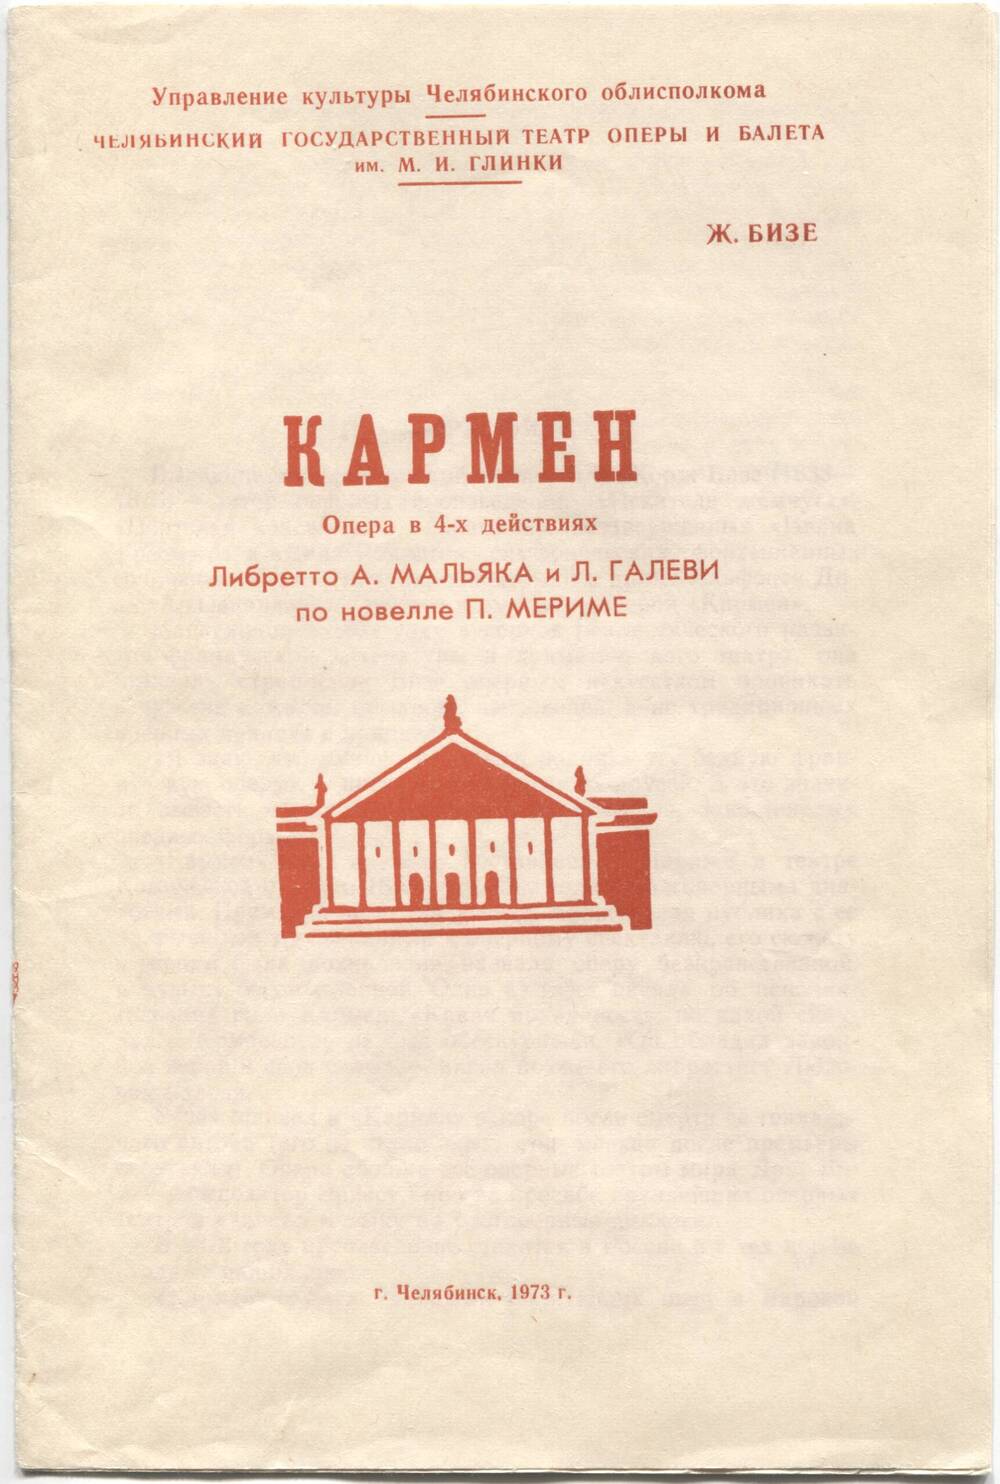 Программа театральная. Челябинский театр оперы и балета. Опера Ж. Бизе «Кармен».